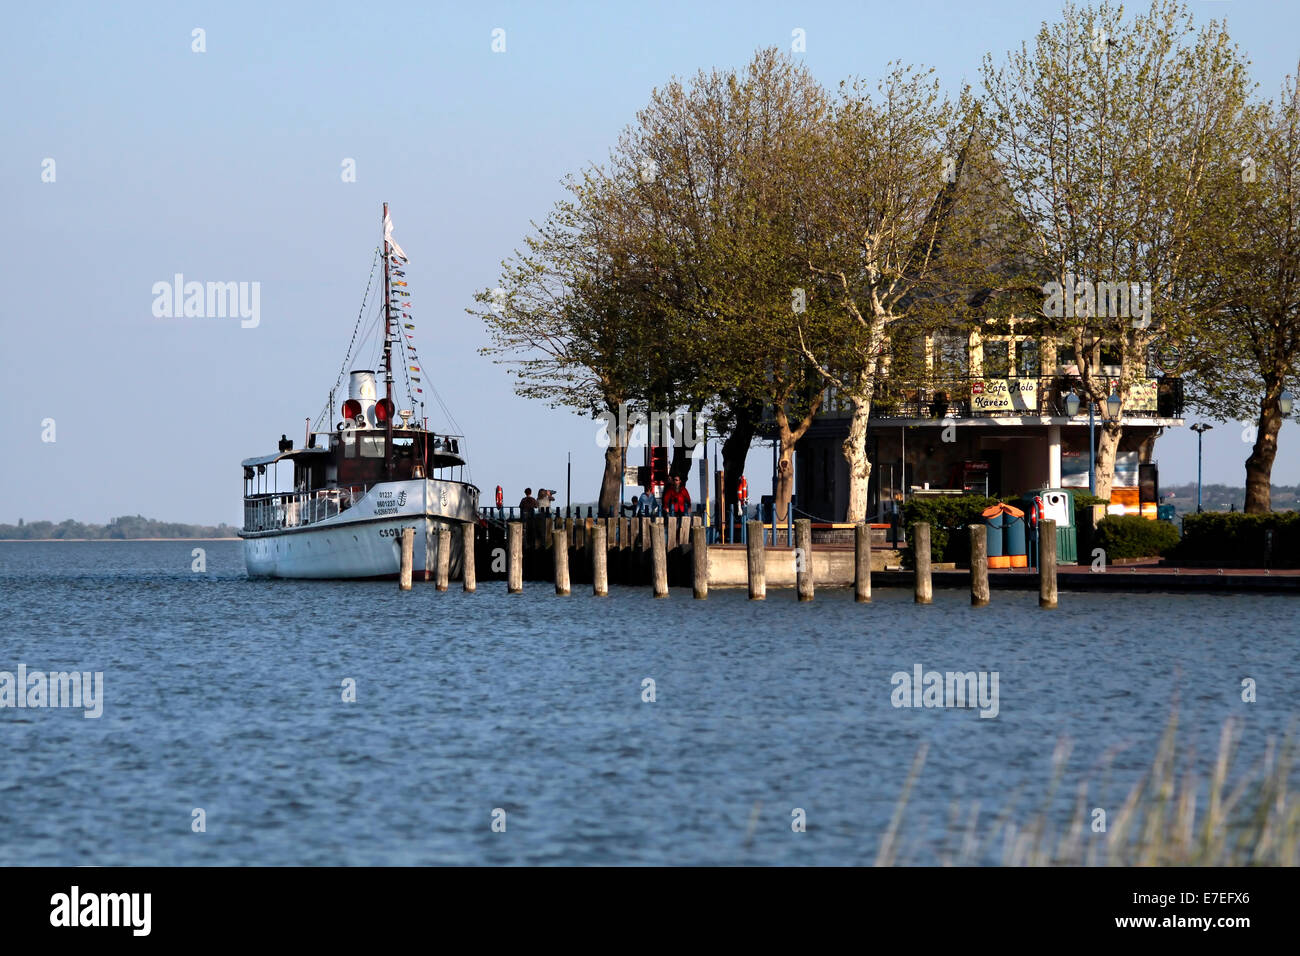 Pier in Keszthely at the north shore of Lake Balaton, Hungary Stock Photo